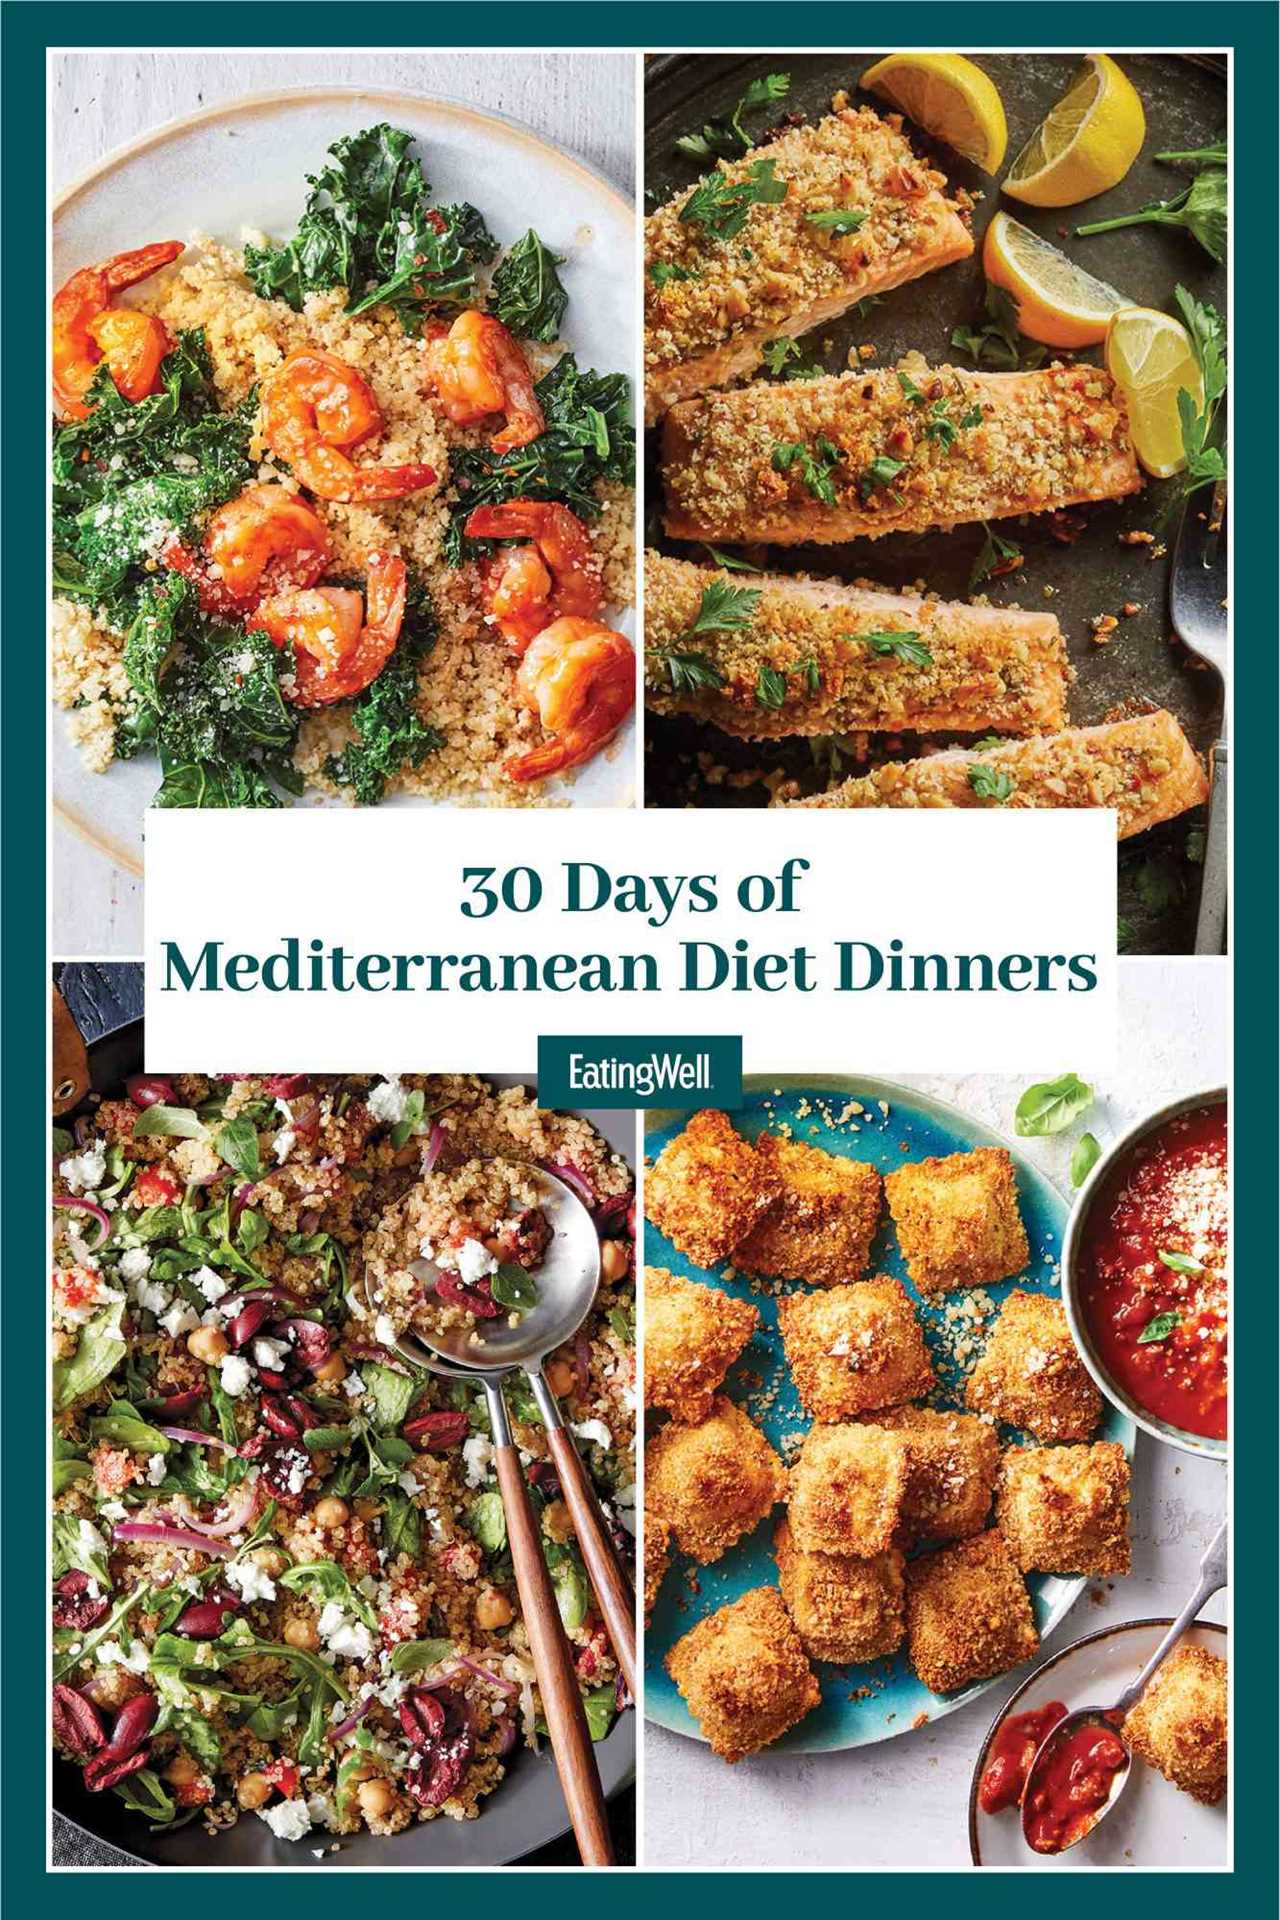 Healthy Living Class - Mediterranean Diet